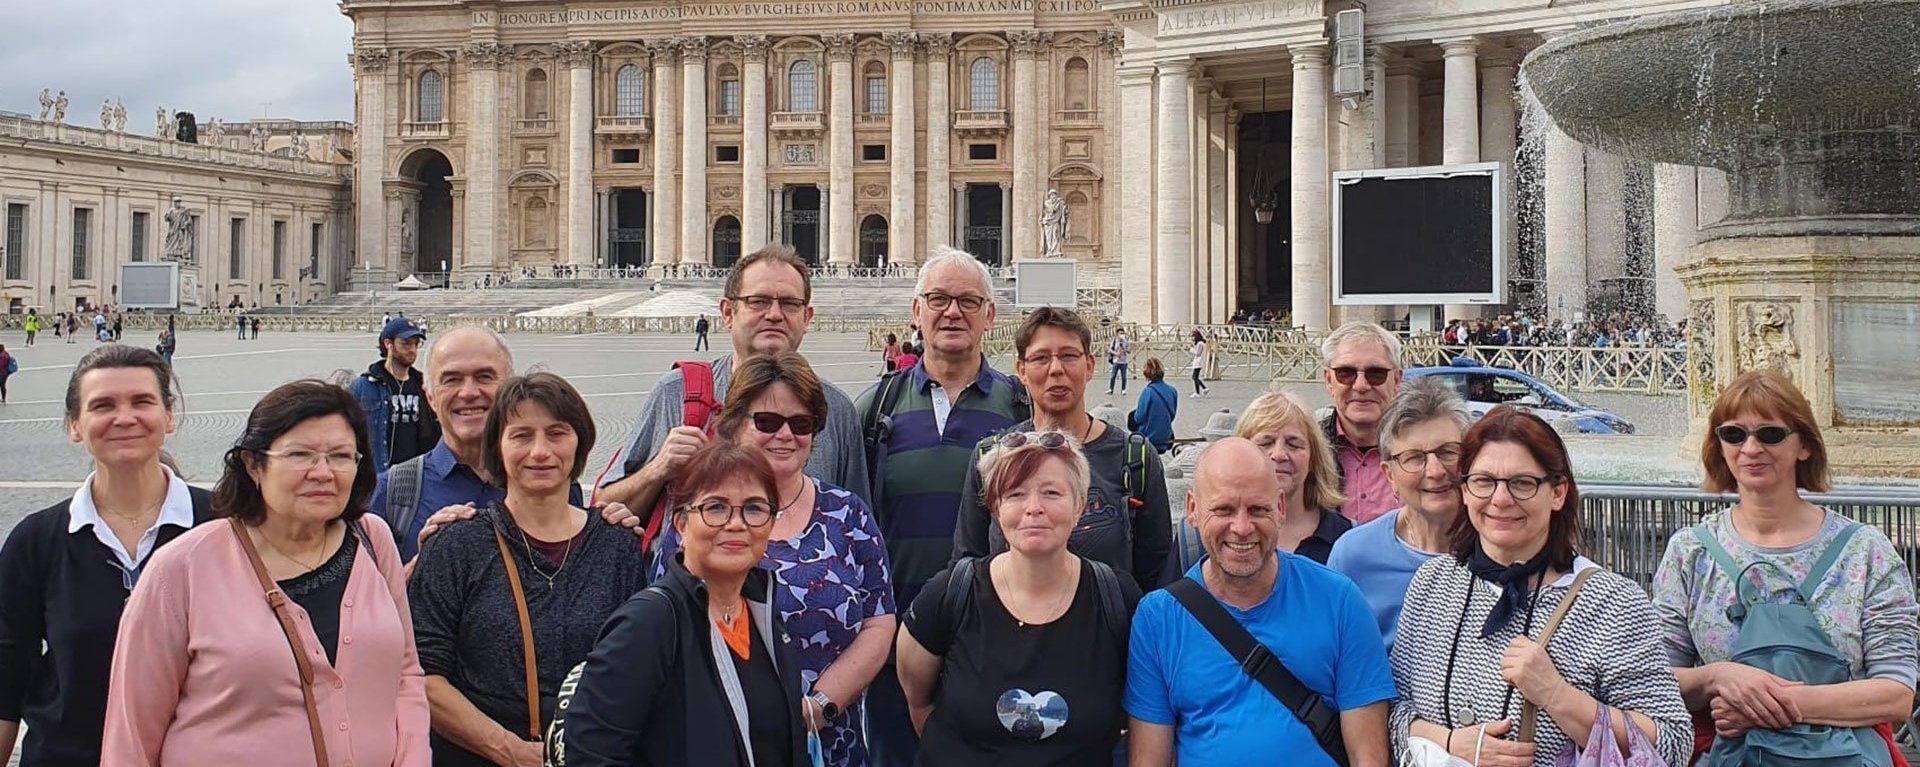 Gruppenfoto im Vatikan